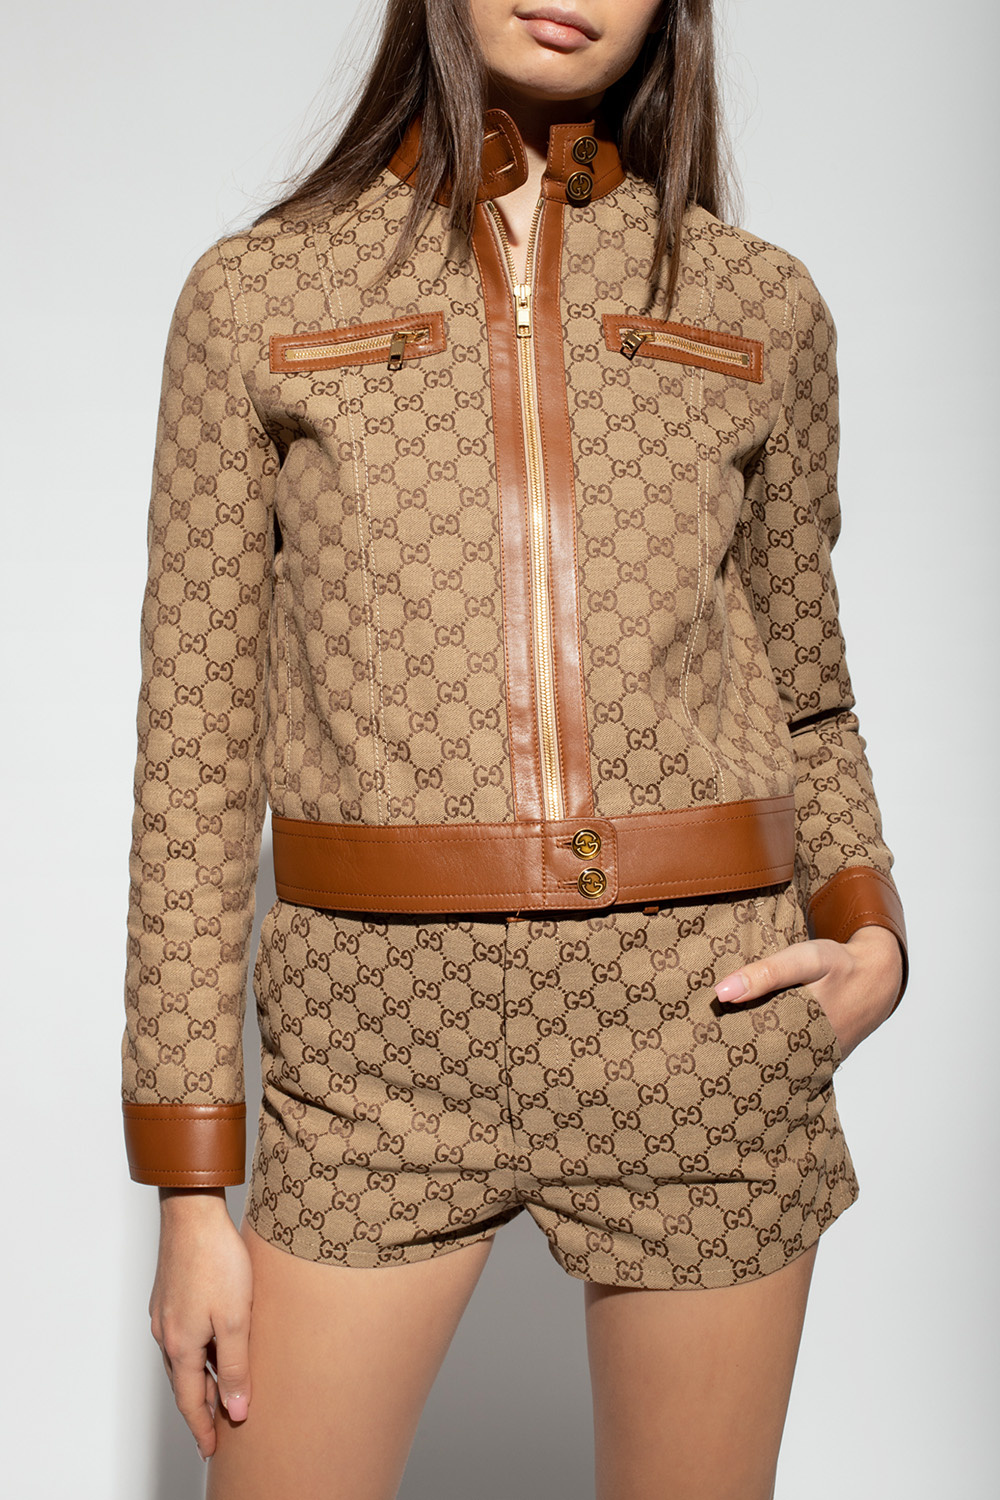 Gucci Gucci Dionysus mini shoulder bag in black leather